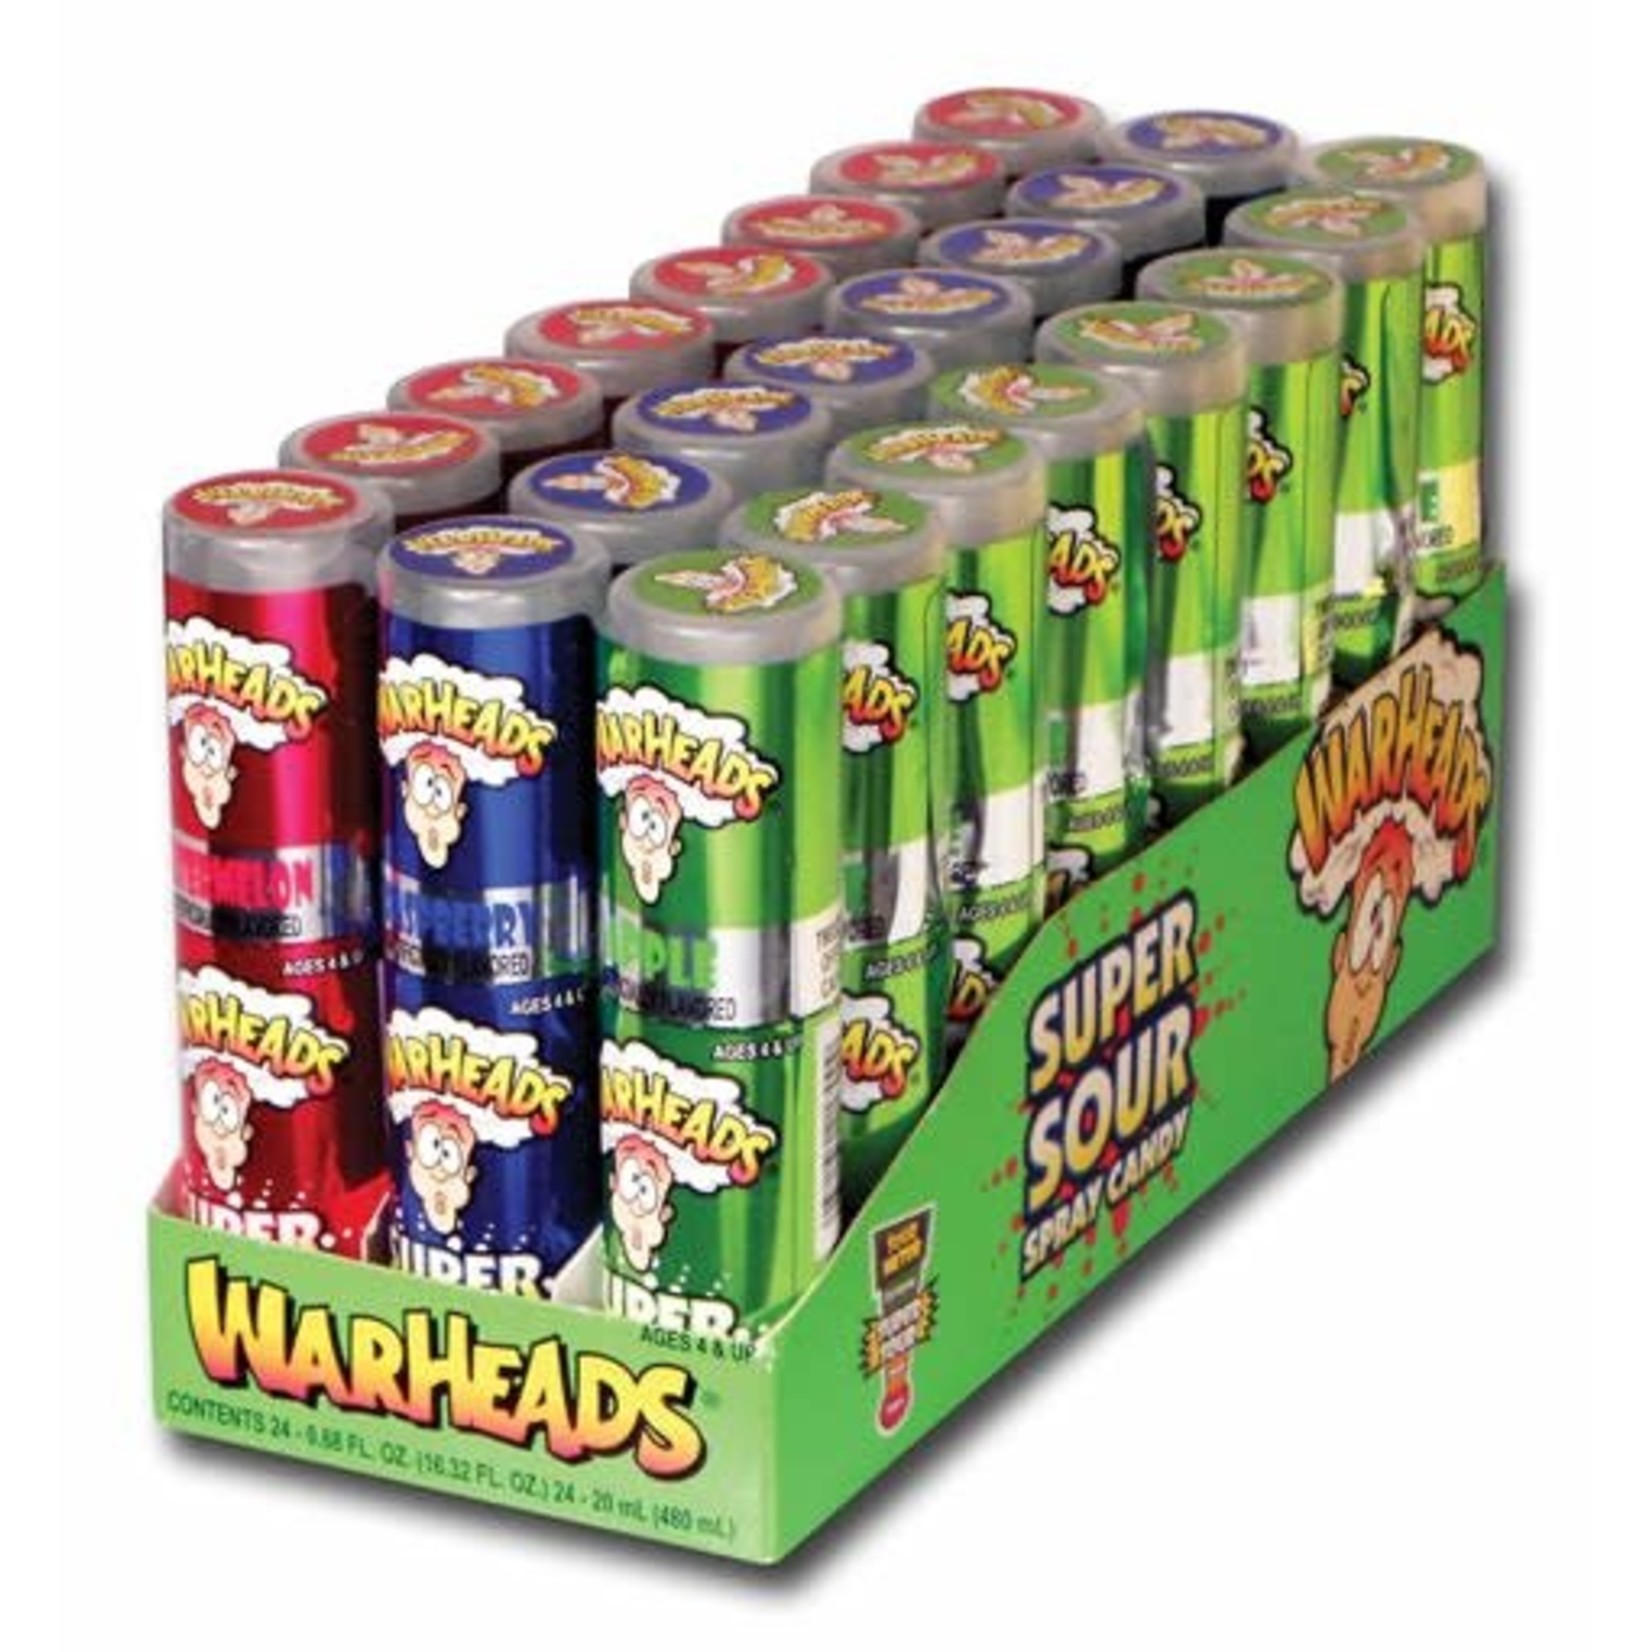 WarHeads Super Sour Spray Candy